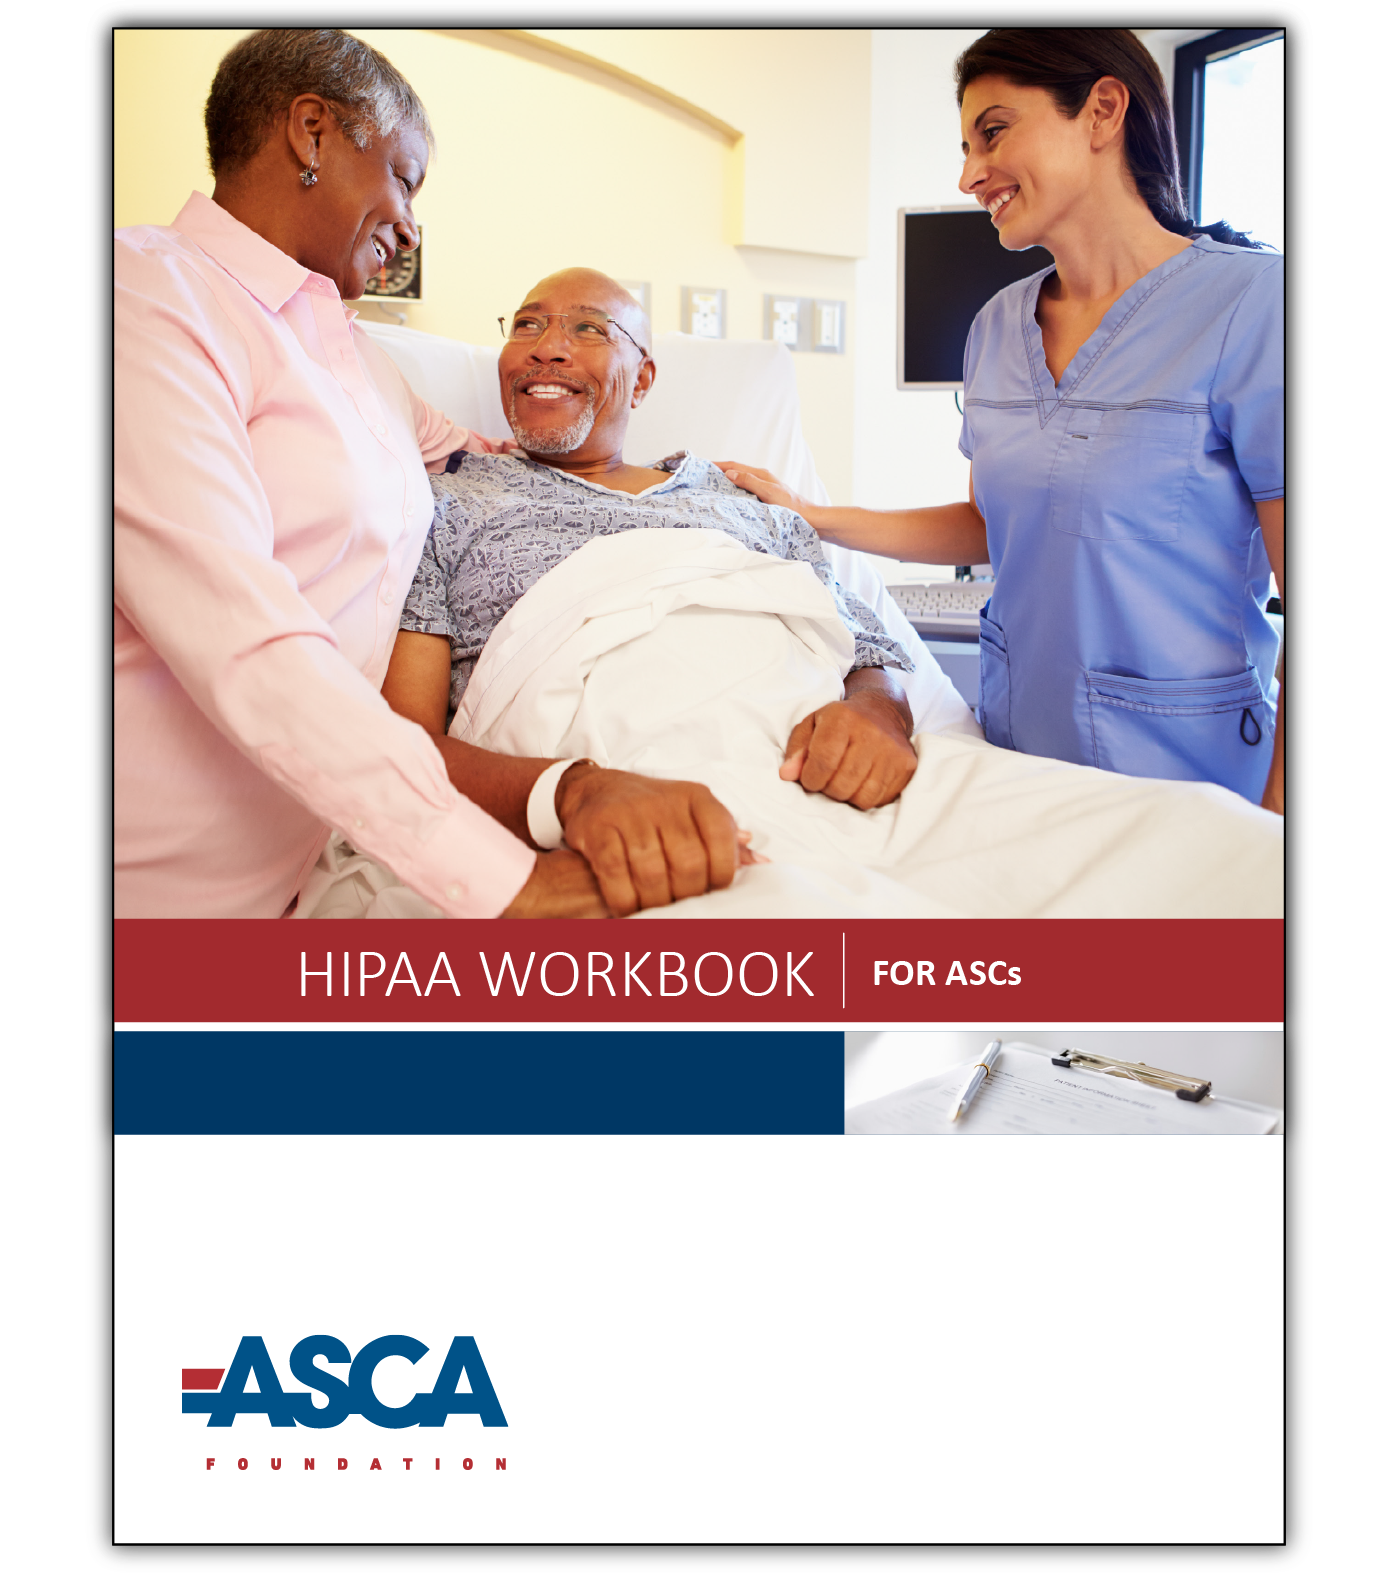 HIPAA Workbook for ASCs